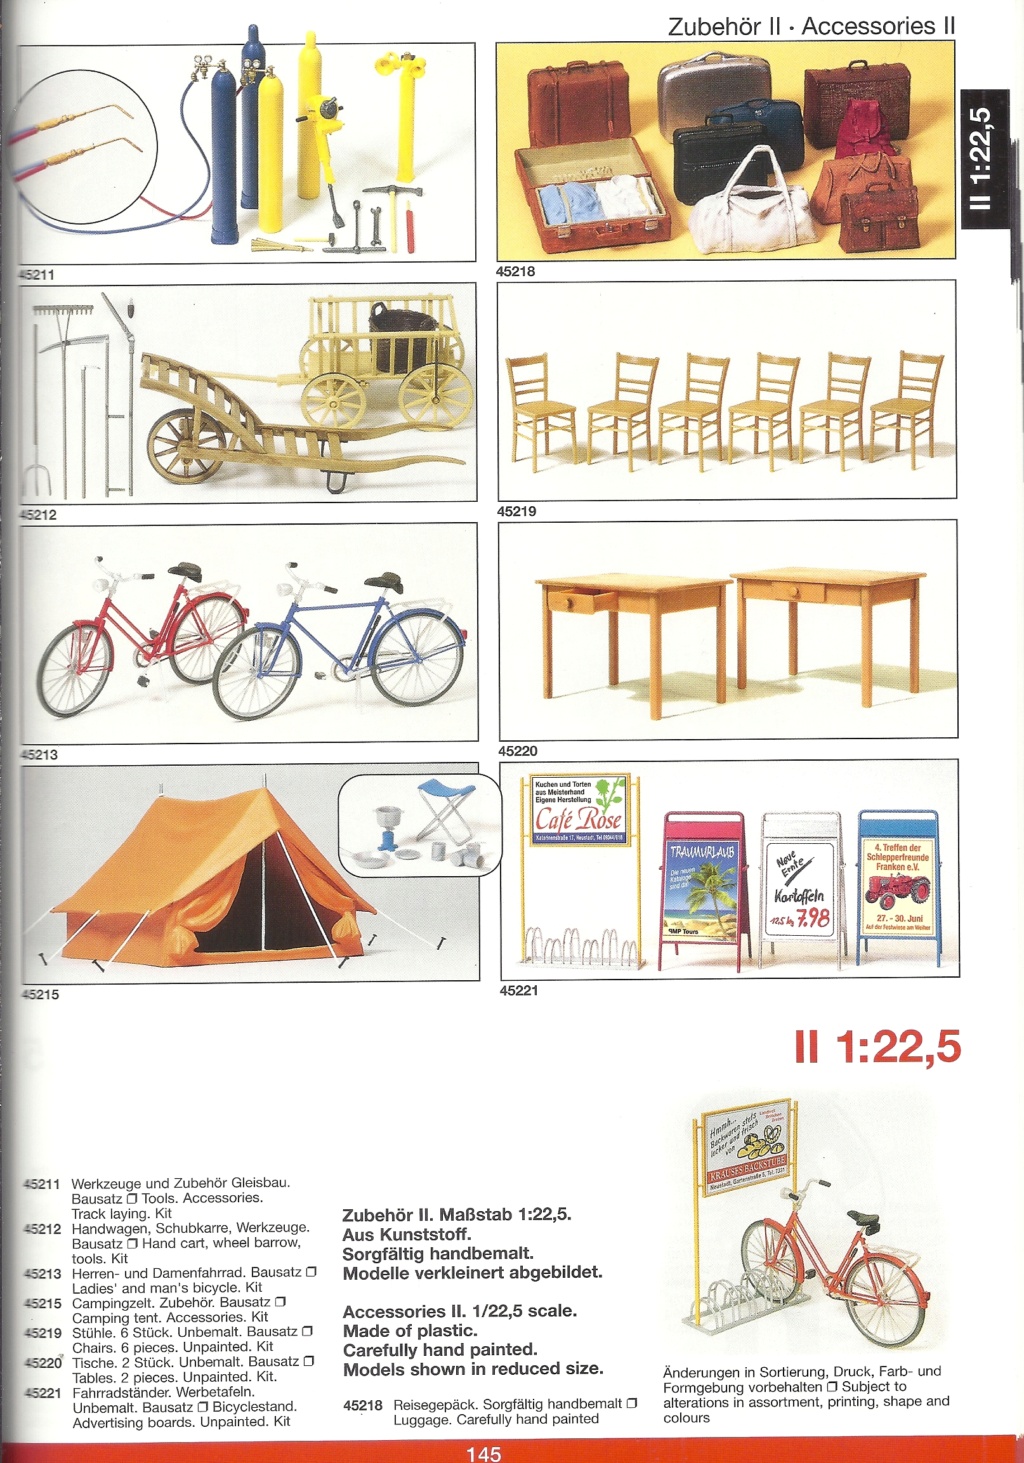 [PREISER 2007] Catalogue PK 24 2007 Preis788